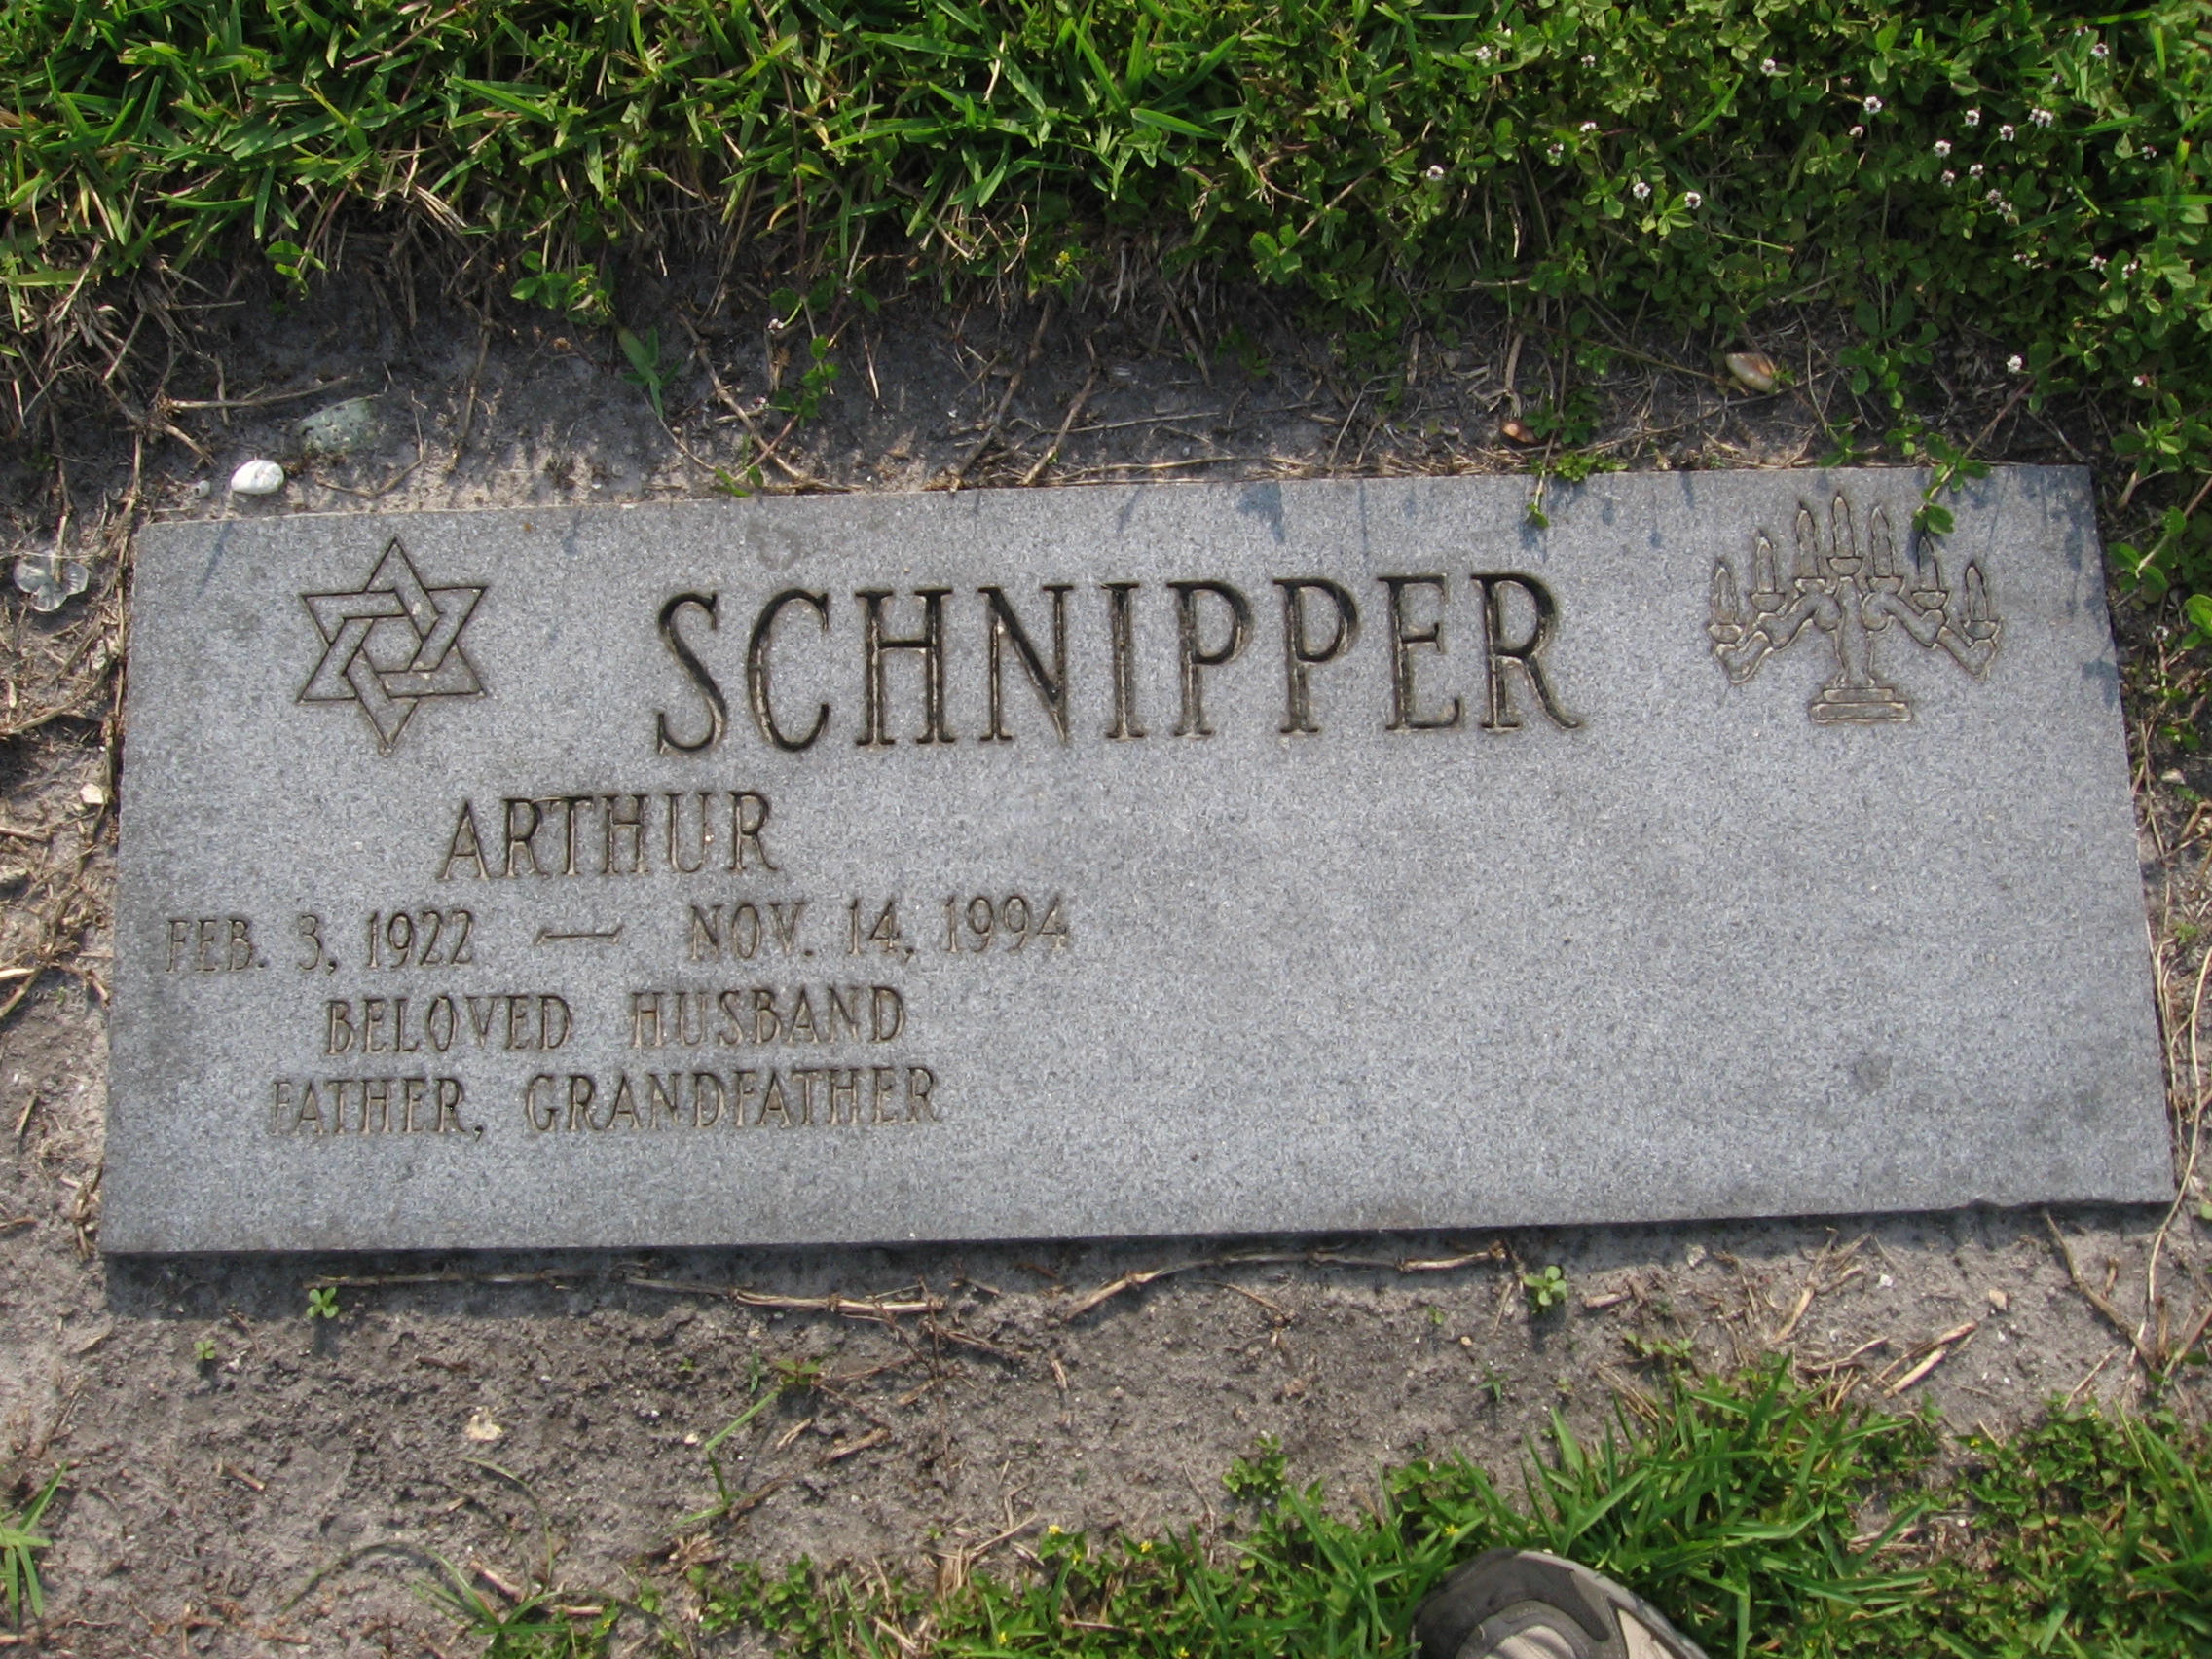 Arthur Schnipper